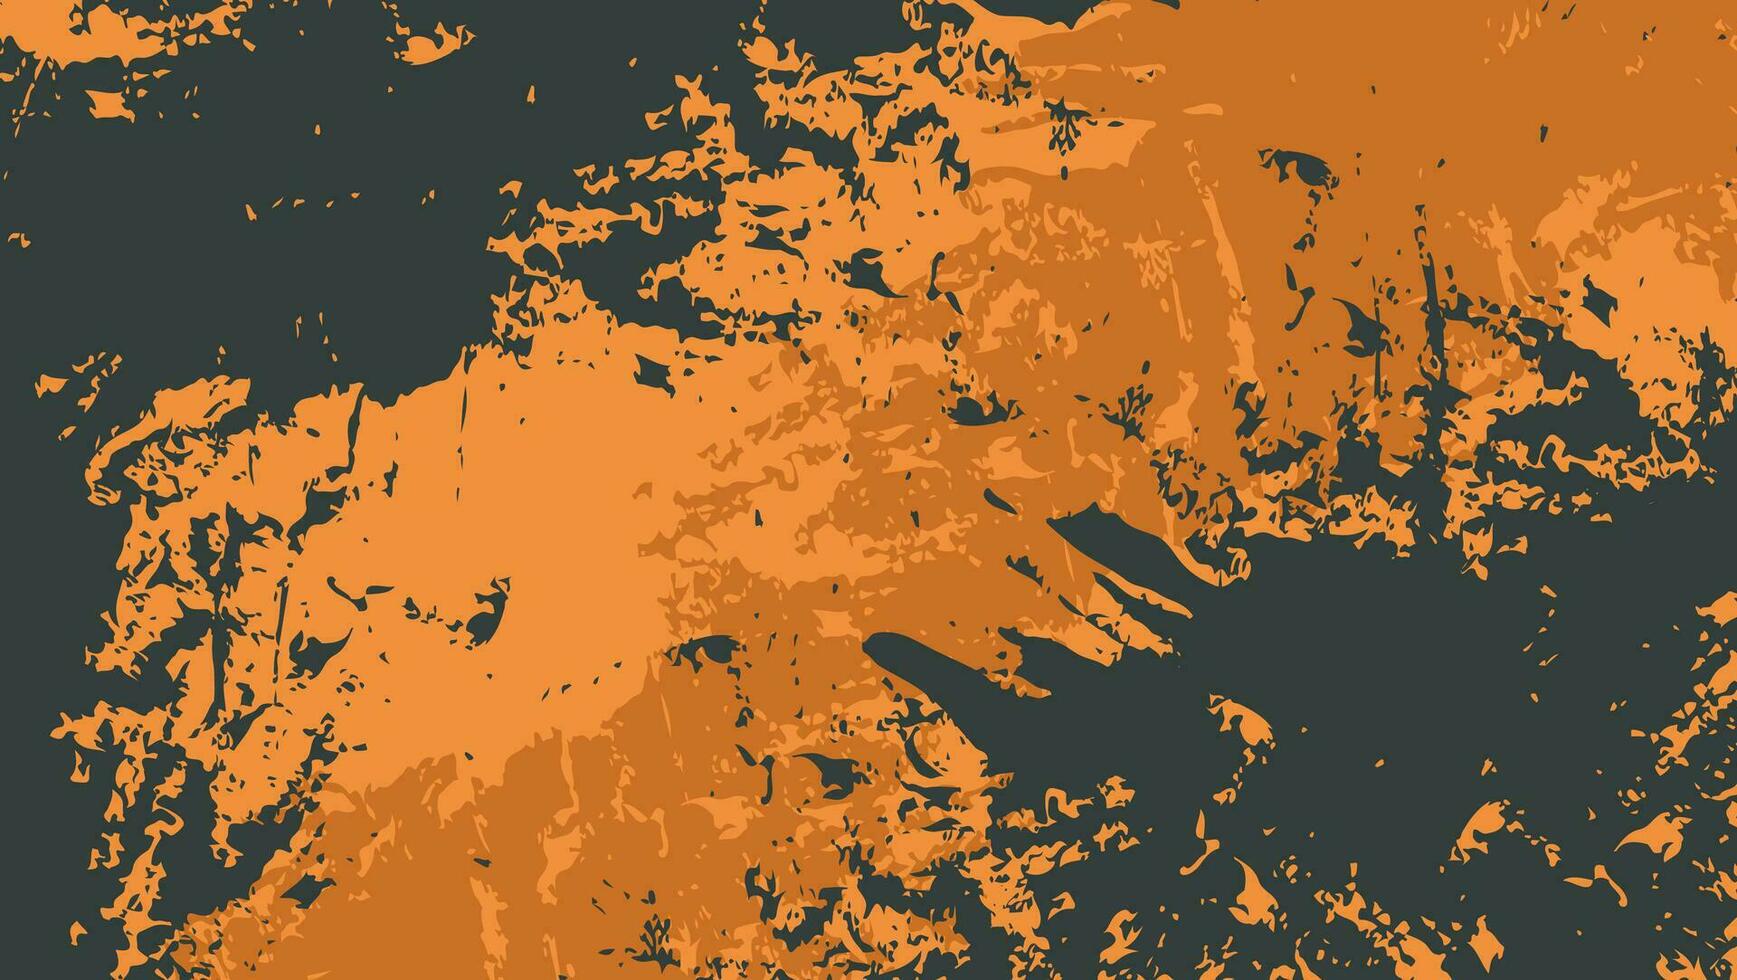 Abstract Orange Grunge Rough Texture In Black Background vector